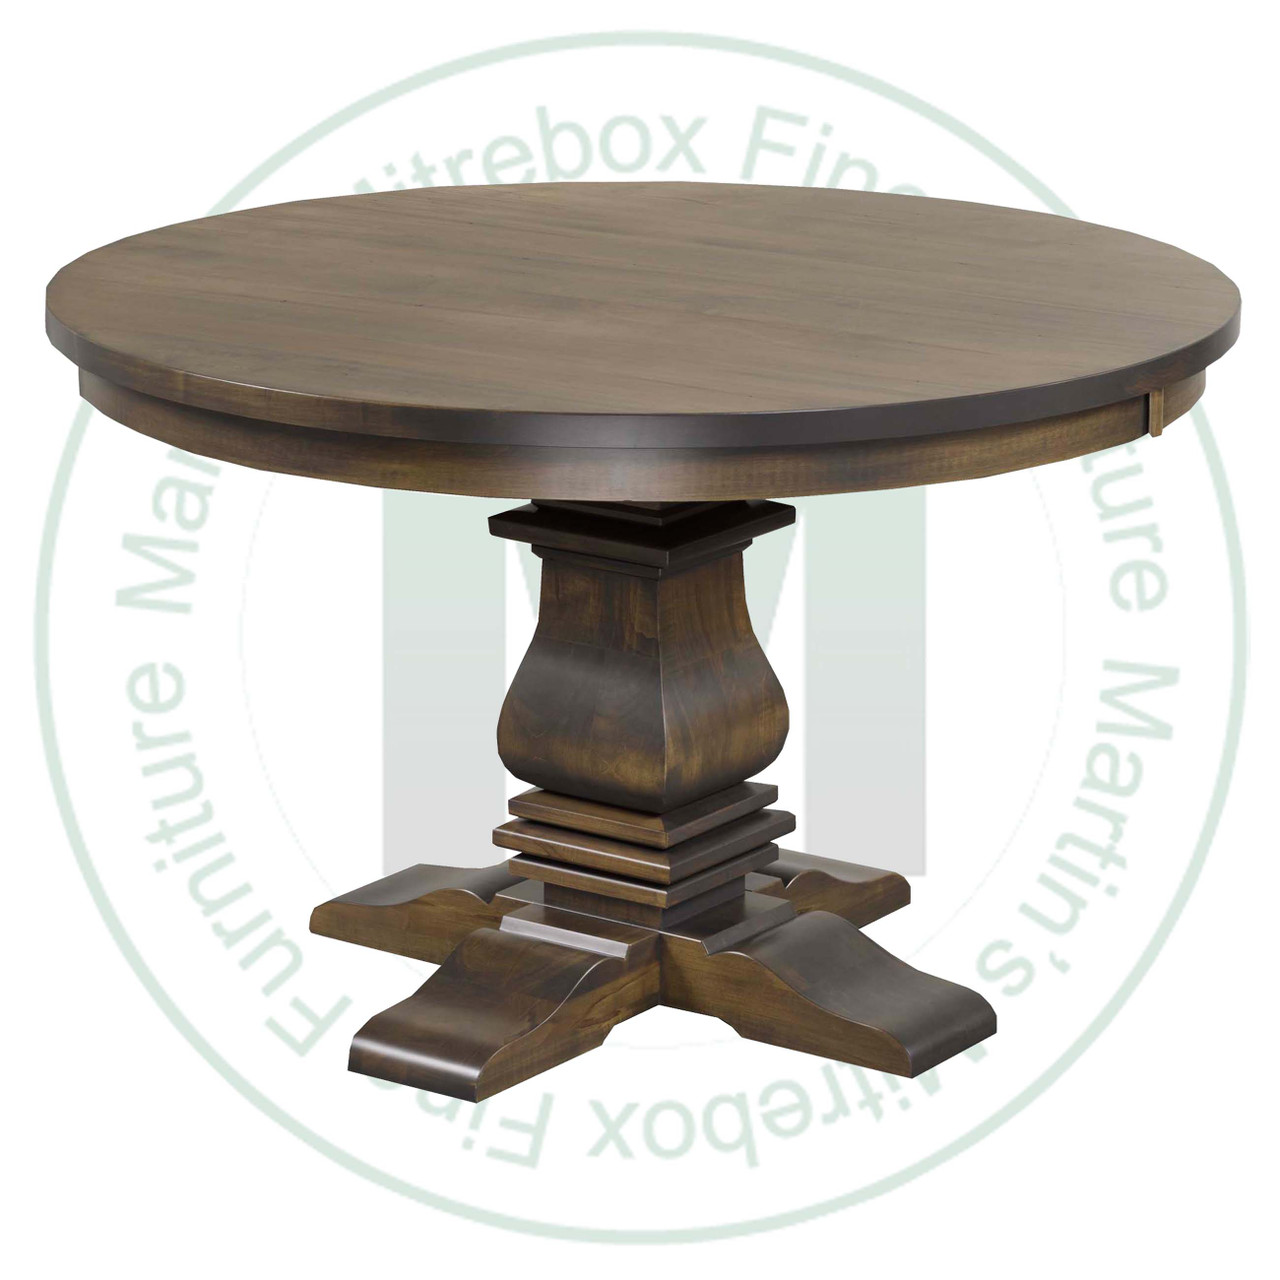 Oak Spartan Collection Single Pedestal Table 60''D x 60''W x 30''H. Table Has 1.25'' Thick Top